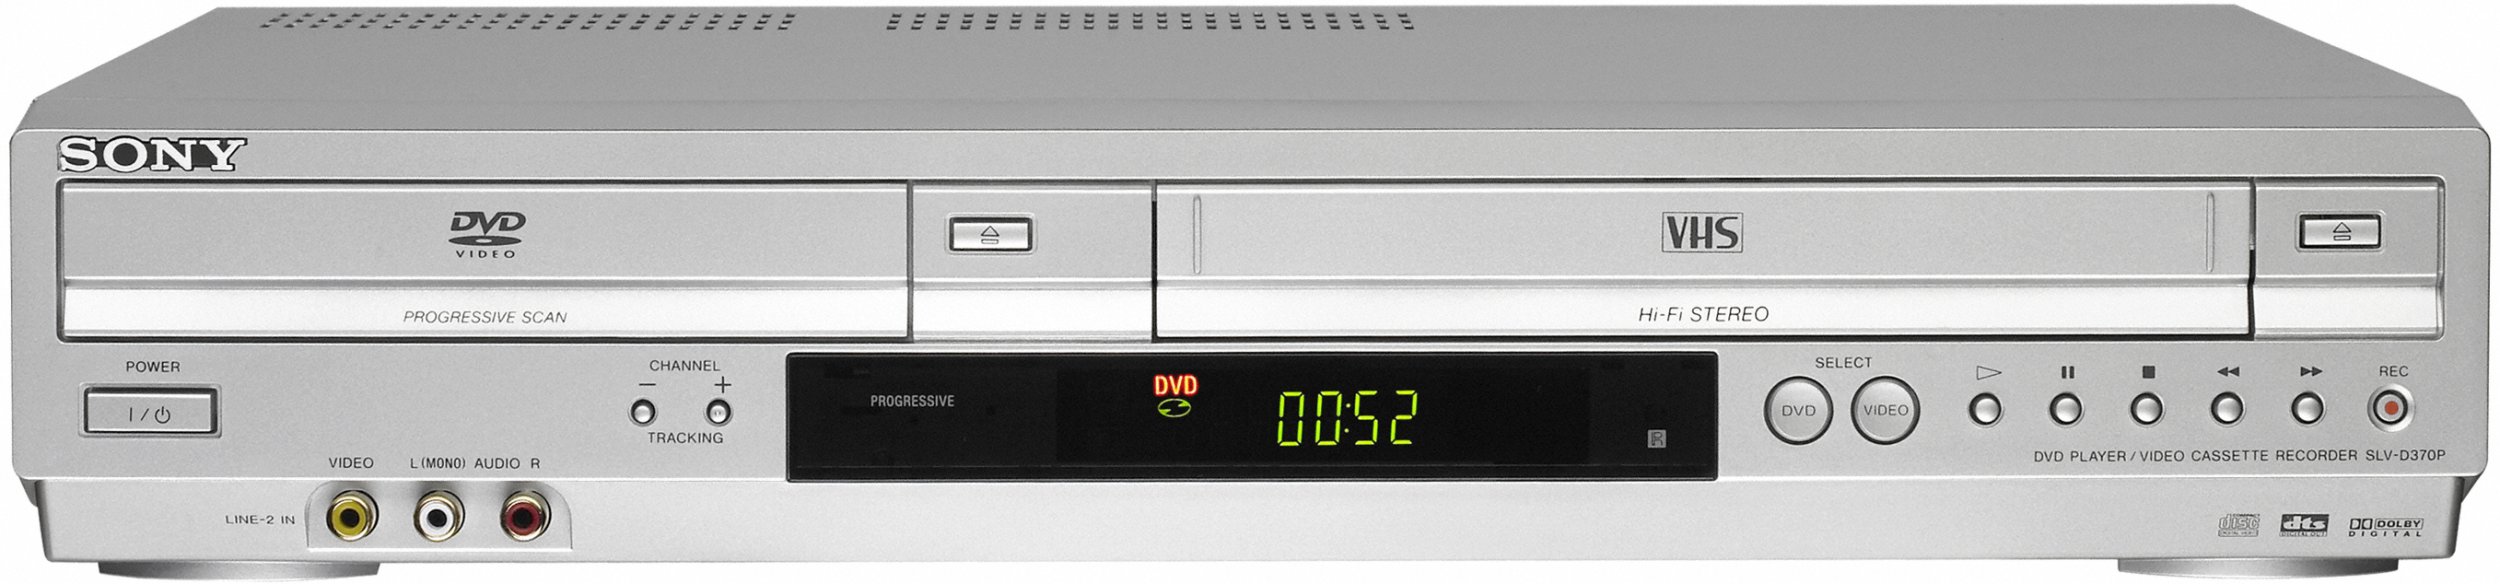 Sony SLVD370P DVD/VCR Progressive Scan Combo Player